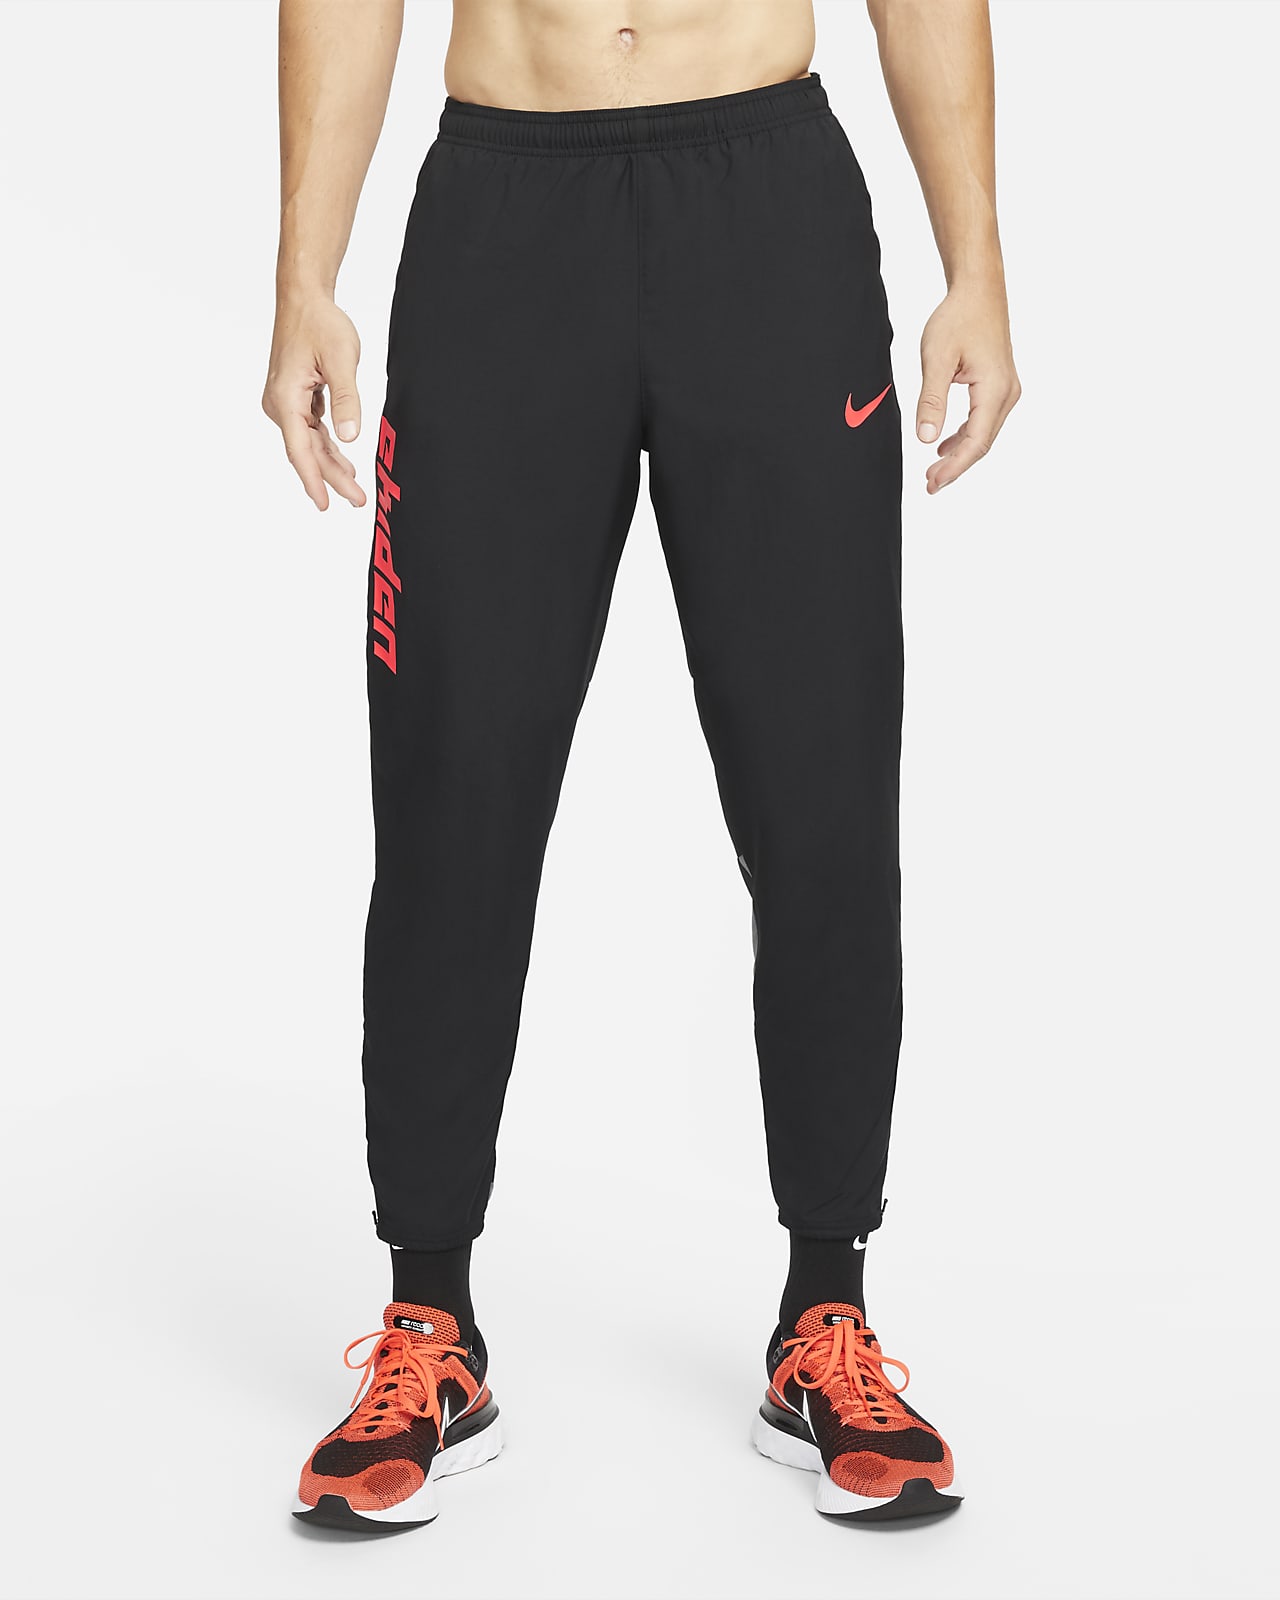 Nike Dri-FIT Challenger Ekiden Men's Woven Running Trousers